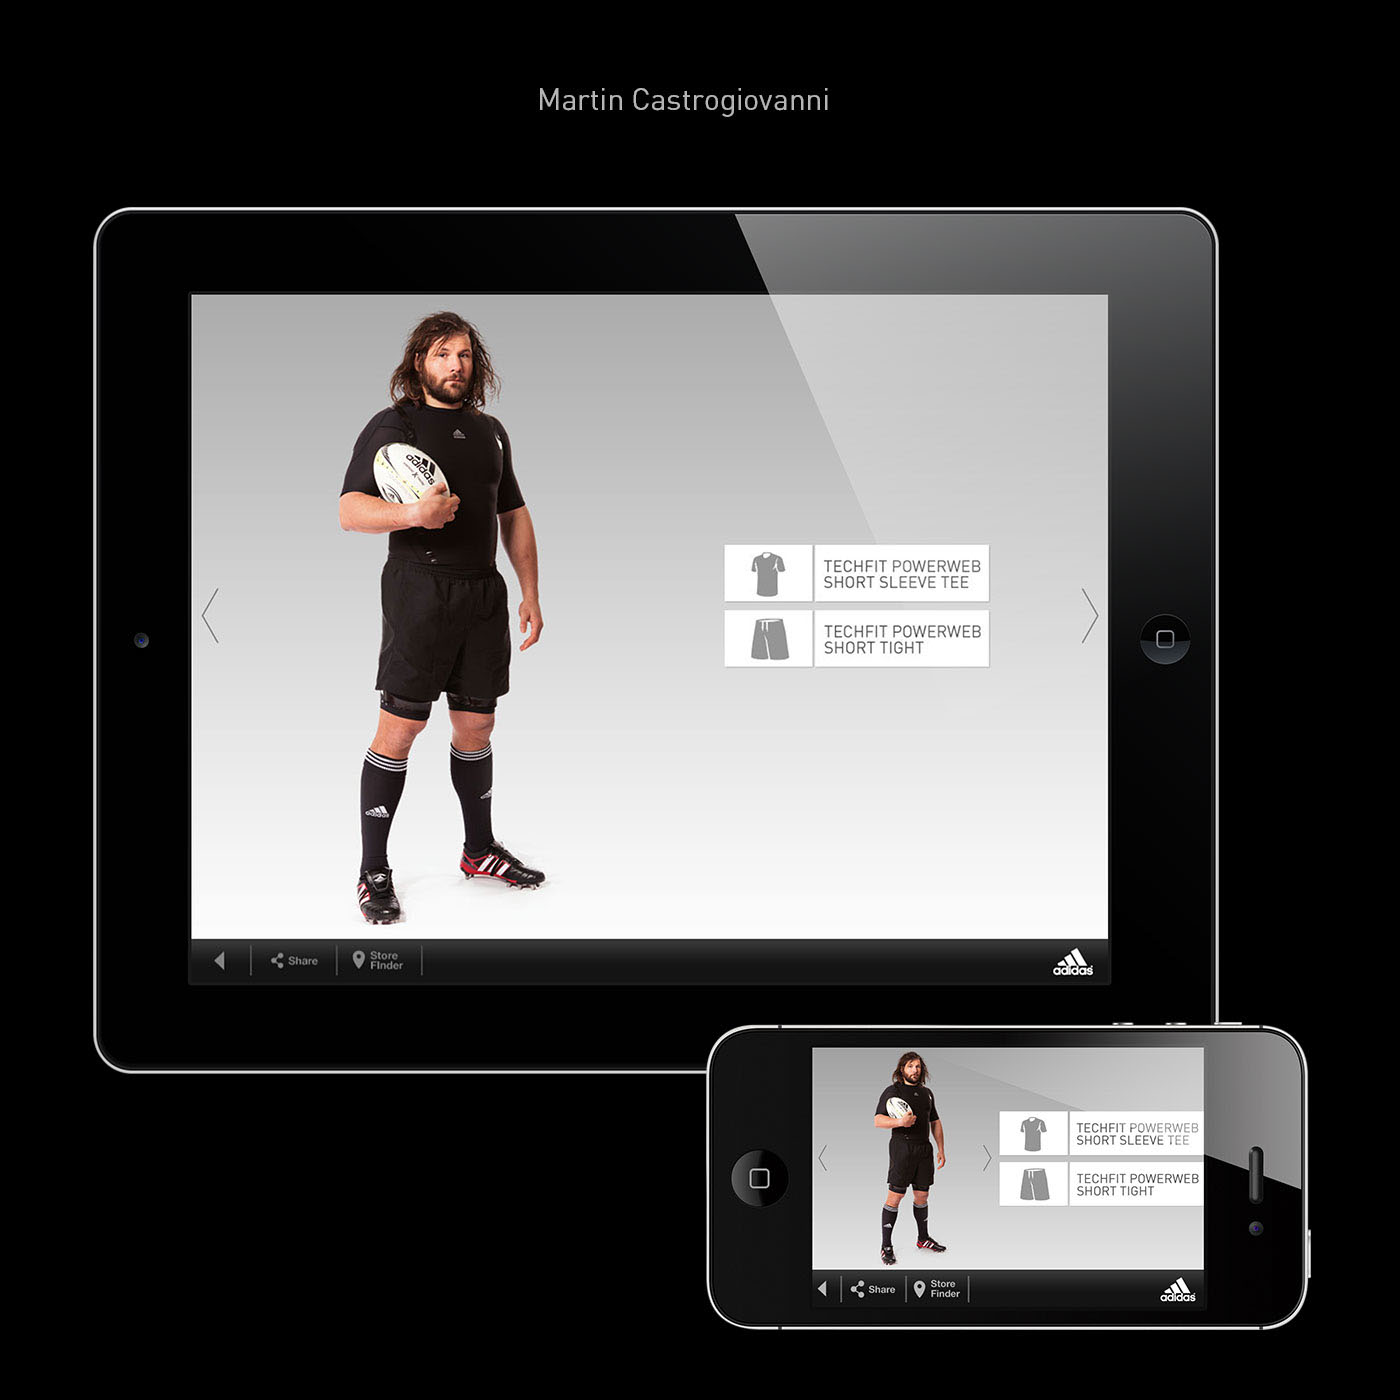 adidas training Italy iPad iphone apps storyboard daniele de rossi flavia pennetta valentina vezzali alessandro matri martin castrogiovanni football tennis fencing